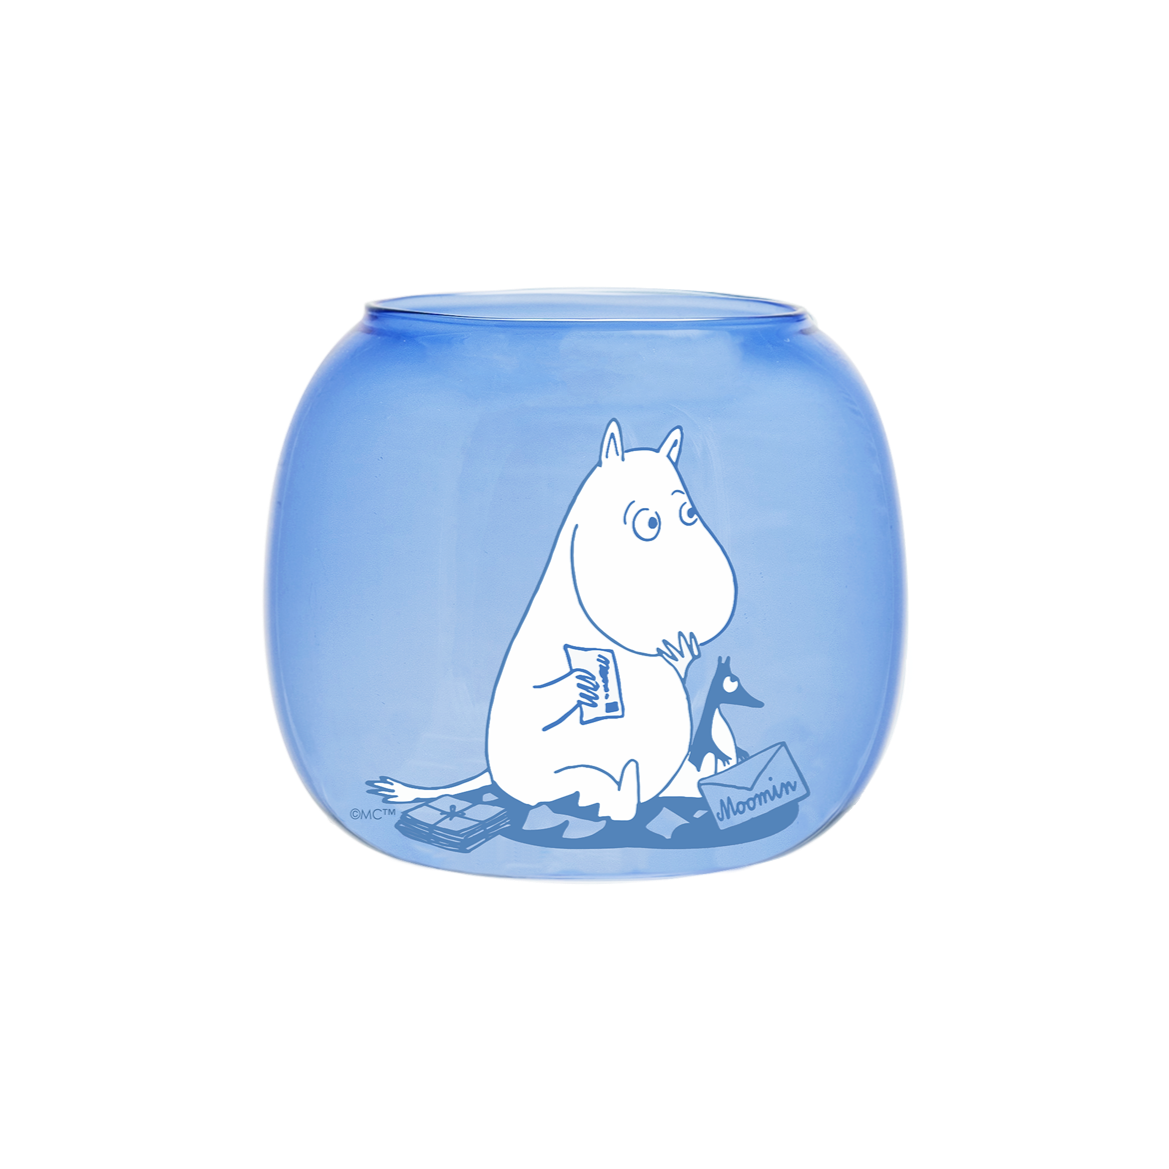 MOOMIN - Tealight Candle Holder, Moomin, Blue. 741-095-06